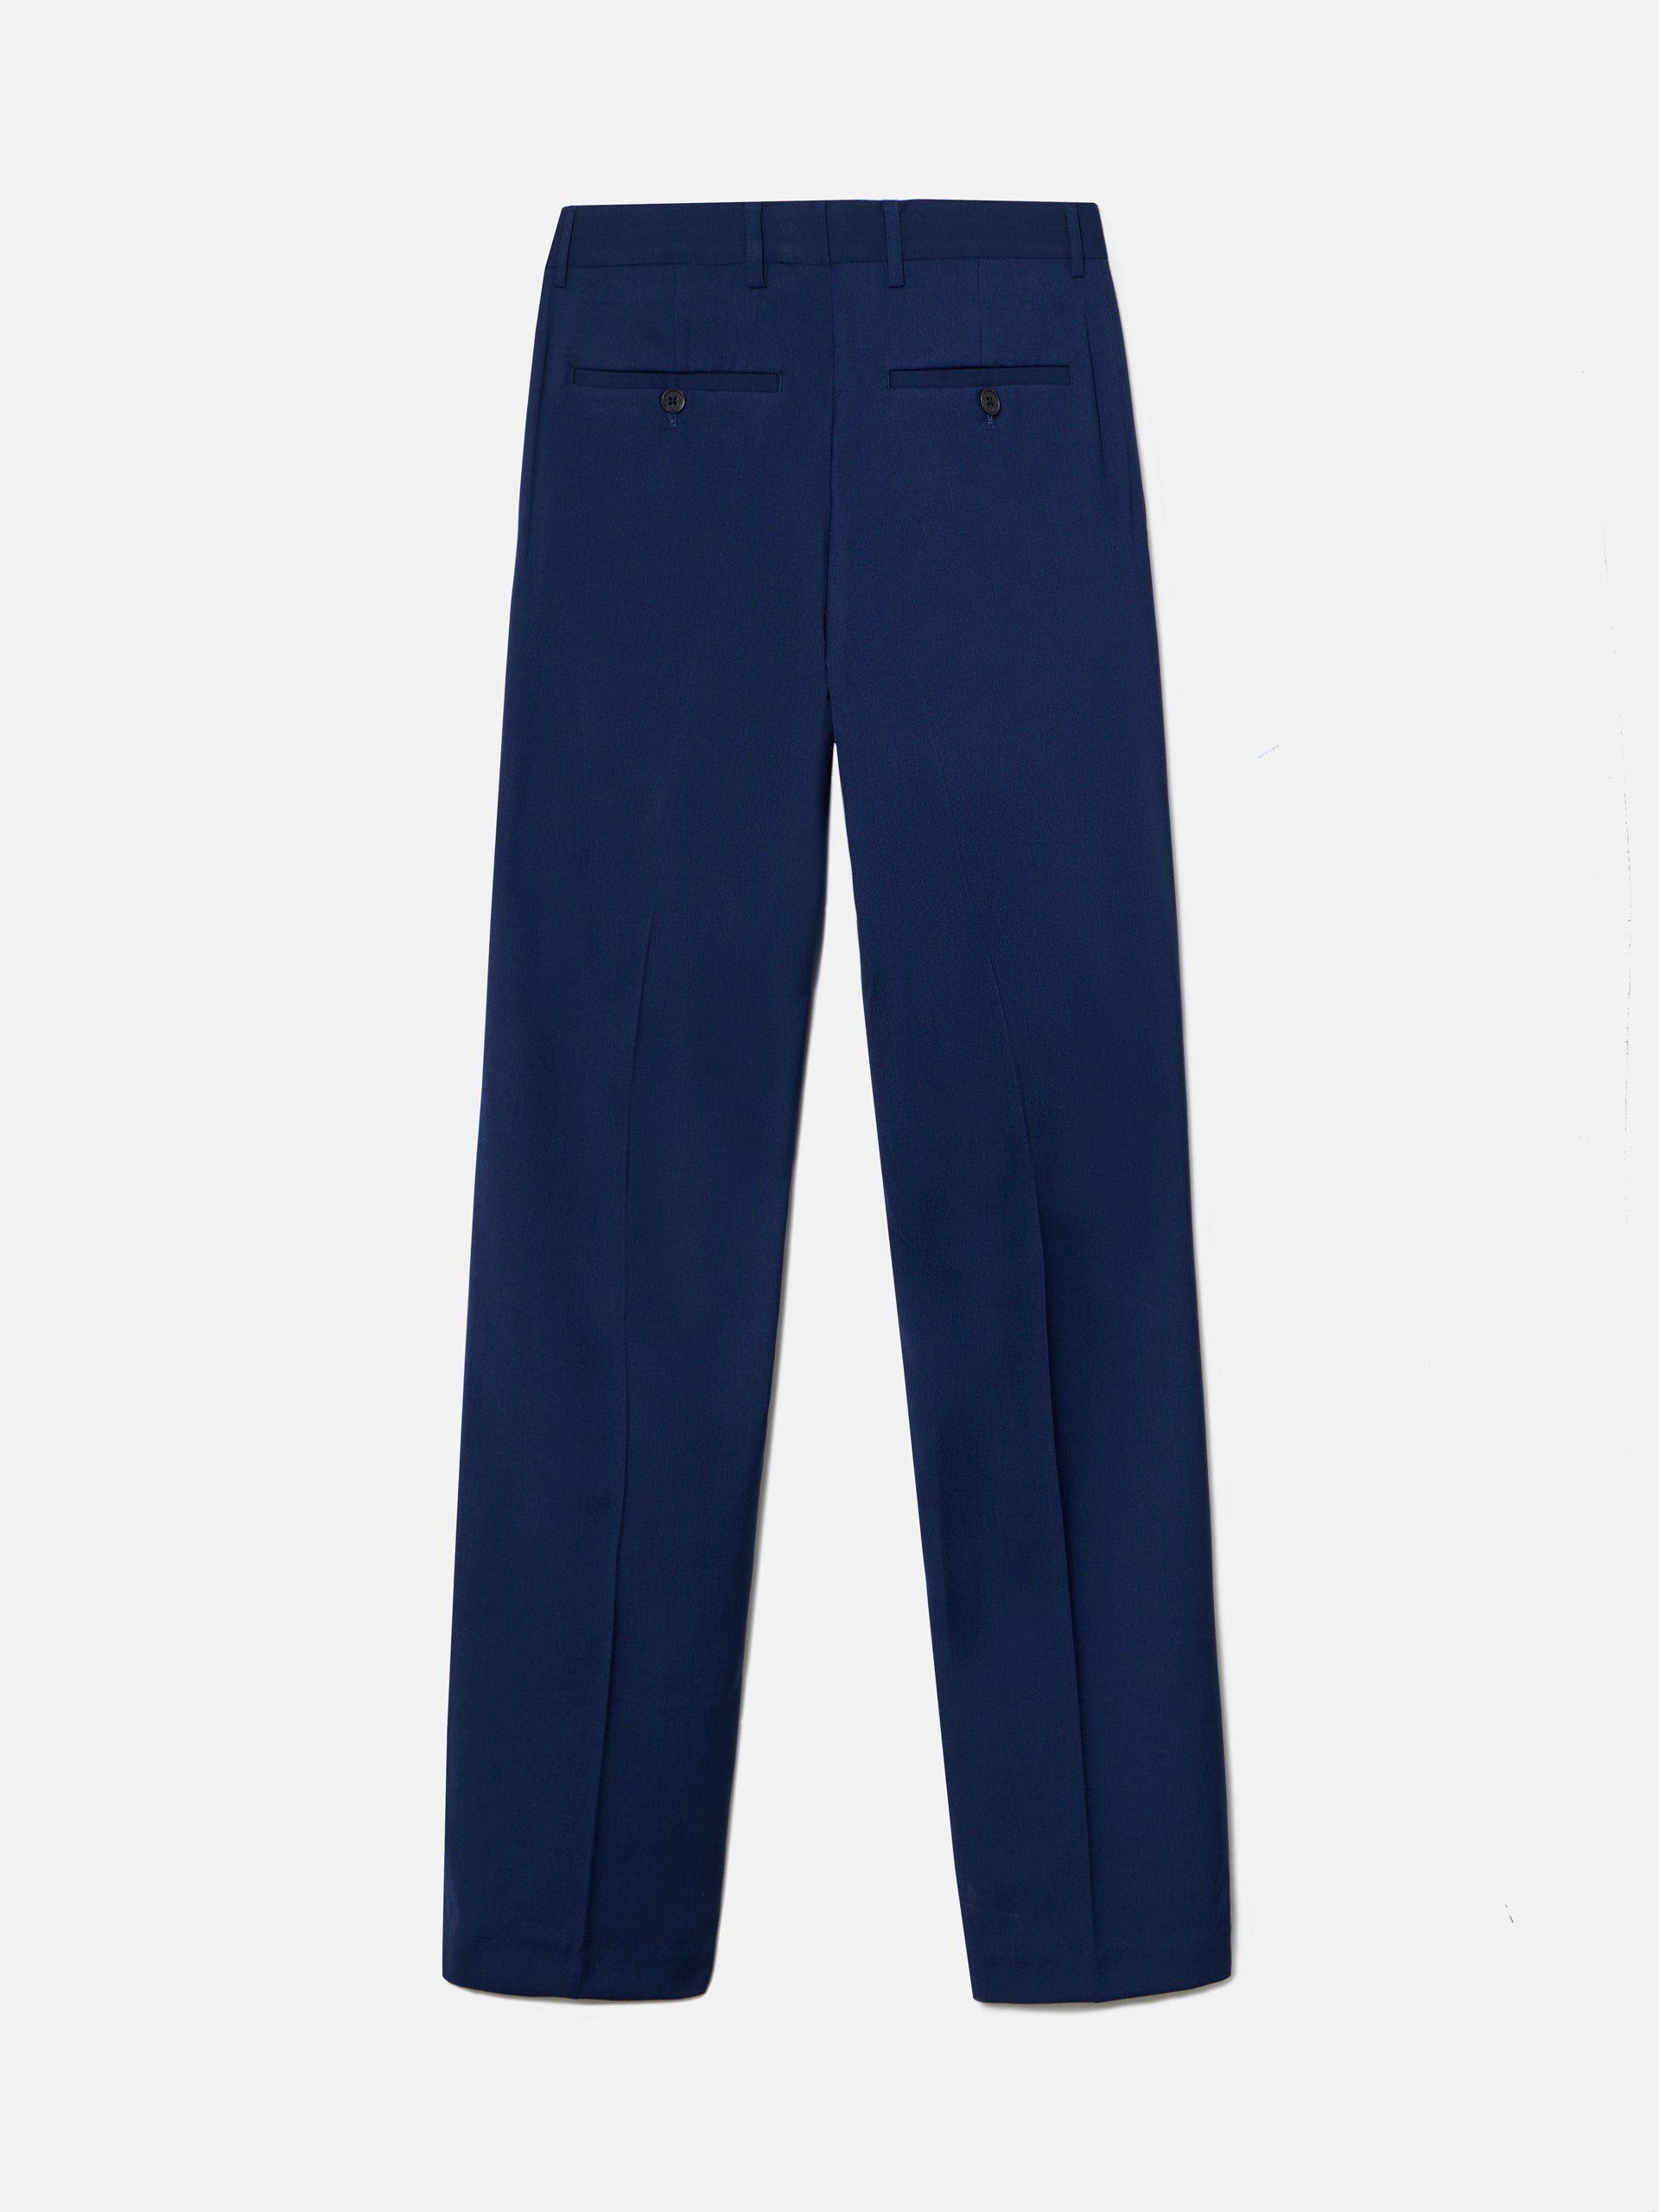 Pantalon traje essential azul medio